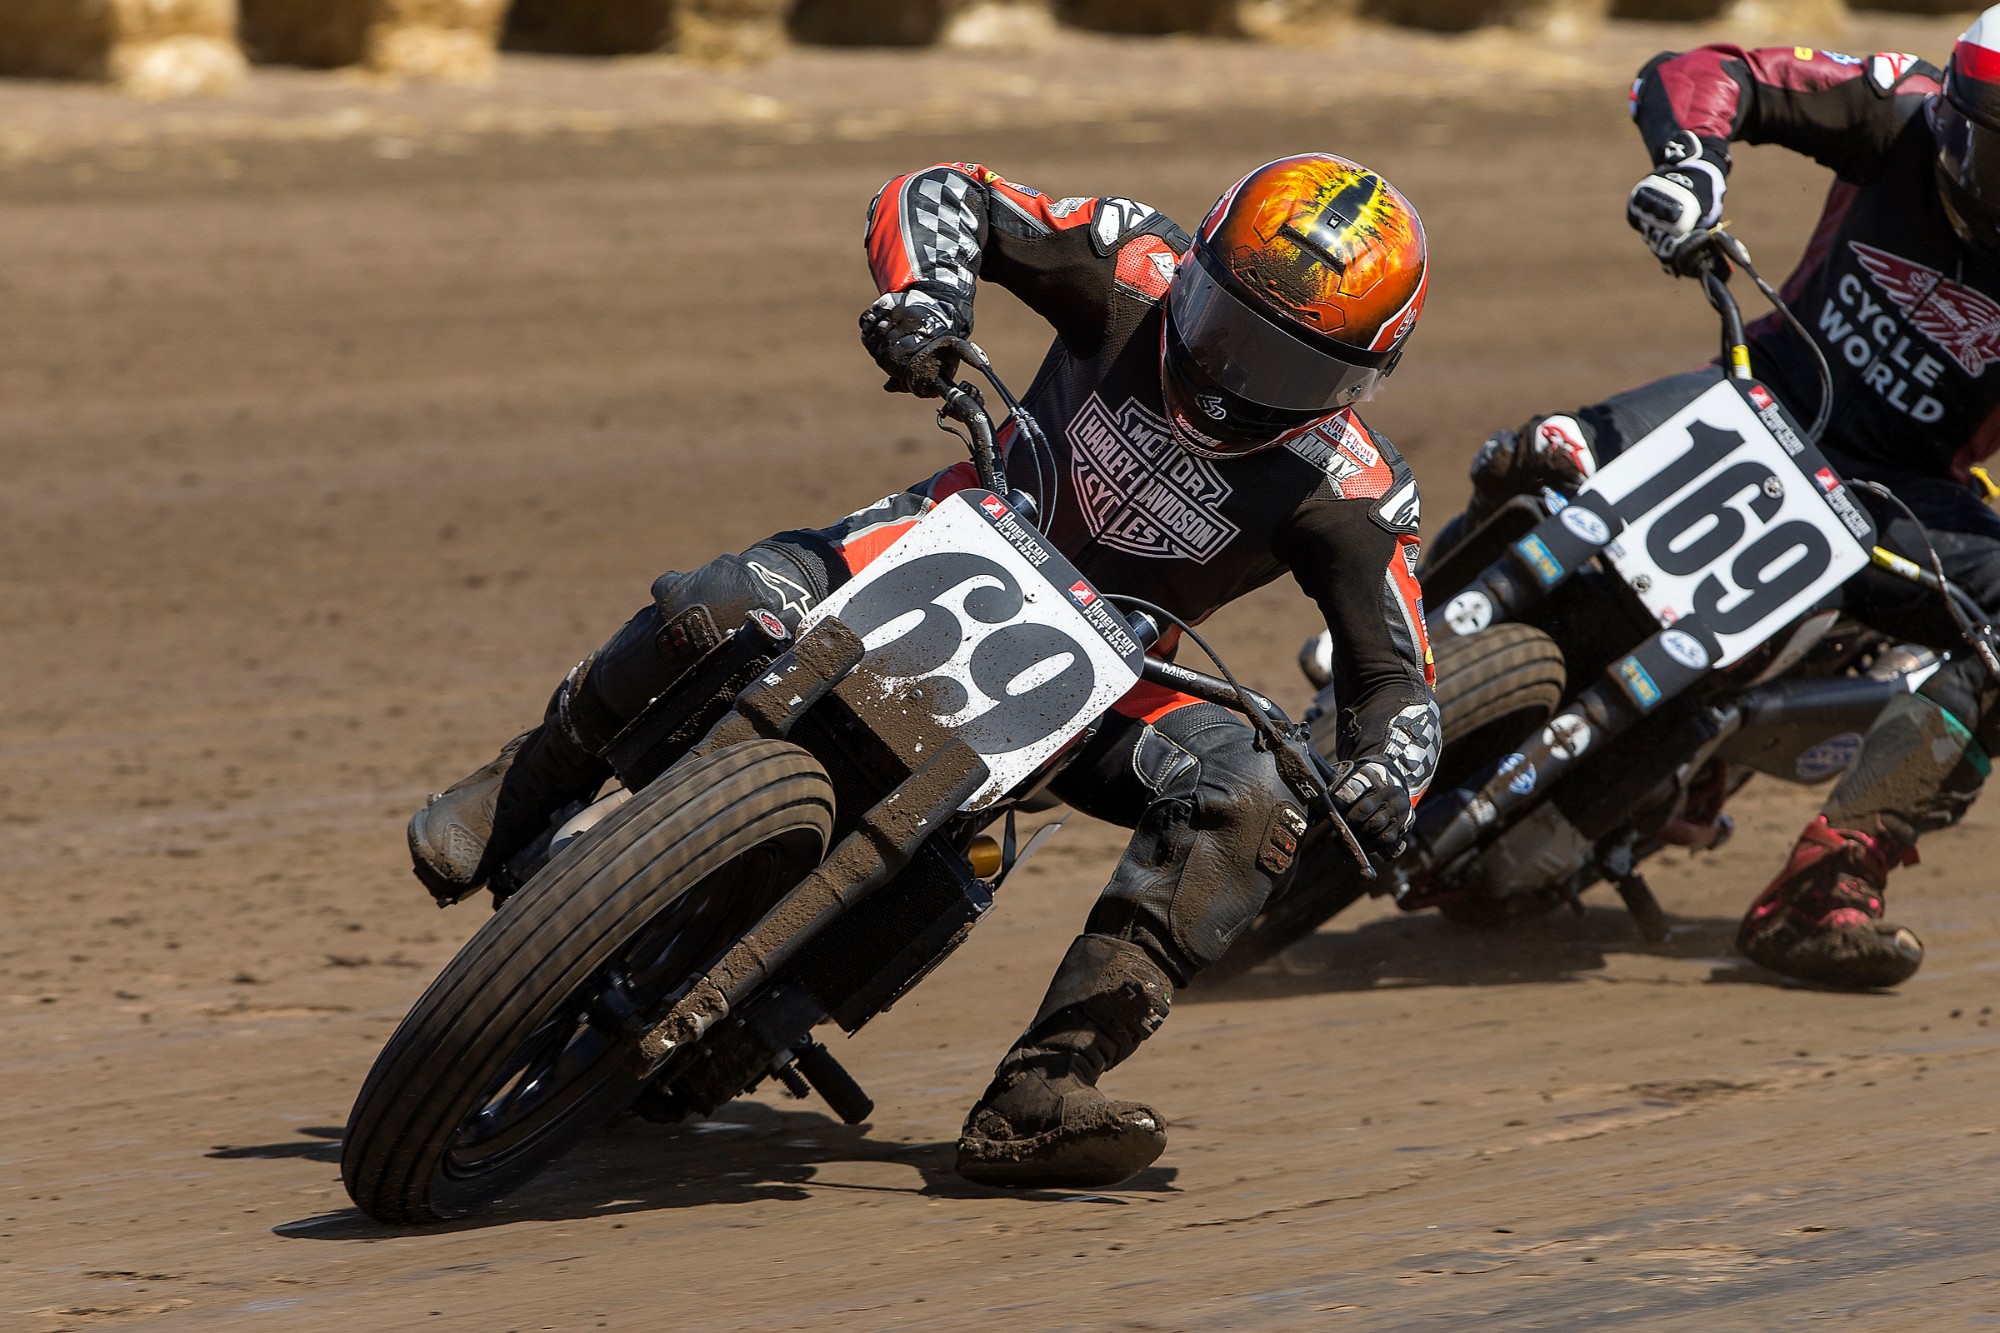 American Flat Track Harley Davidson Announces Its Factory Team Riders For 2019 Season Roadracing World Magazine Motorcycle Riding Racing Tech News